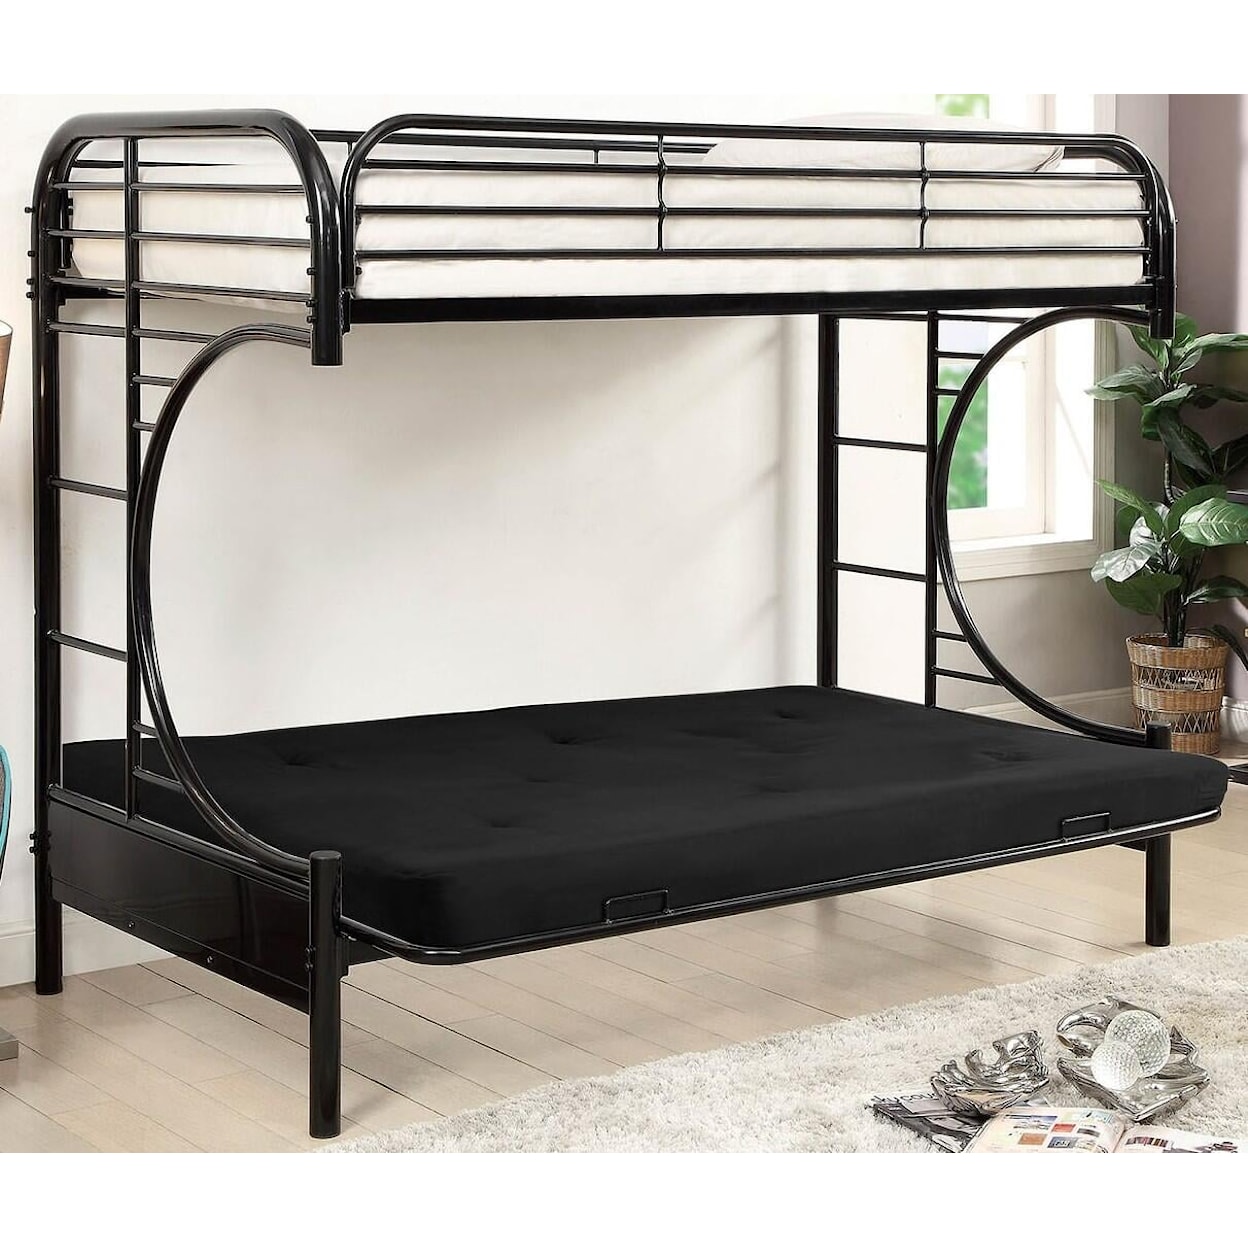 Furniture of America Bunk Bed BLACK TWIN FUTON BUNK BED |